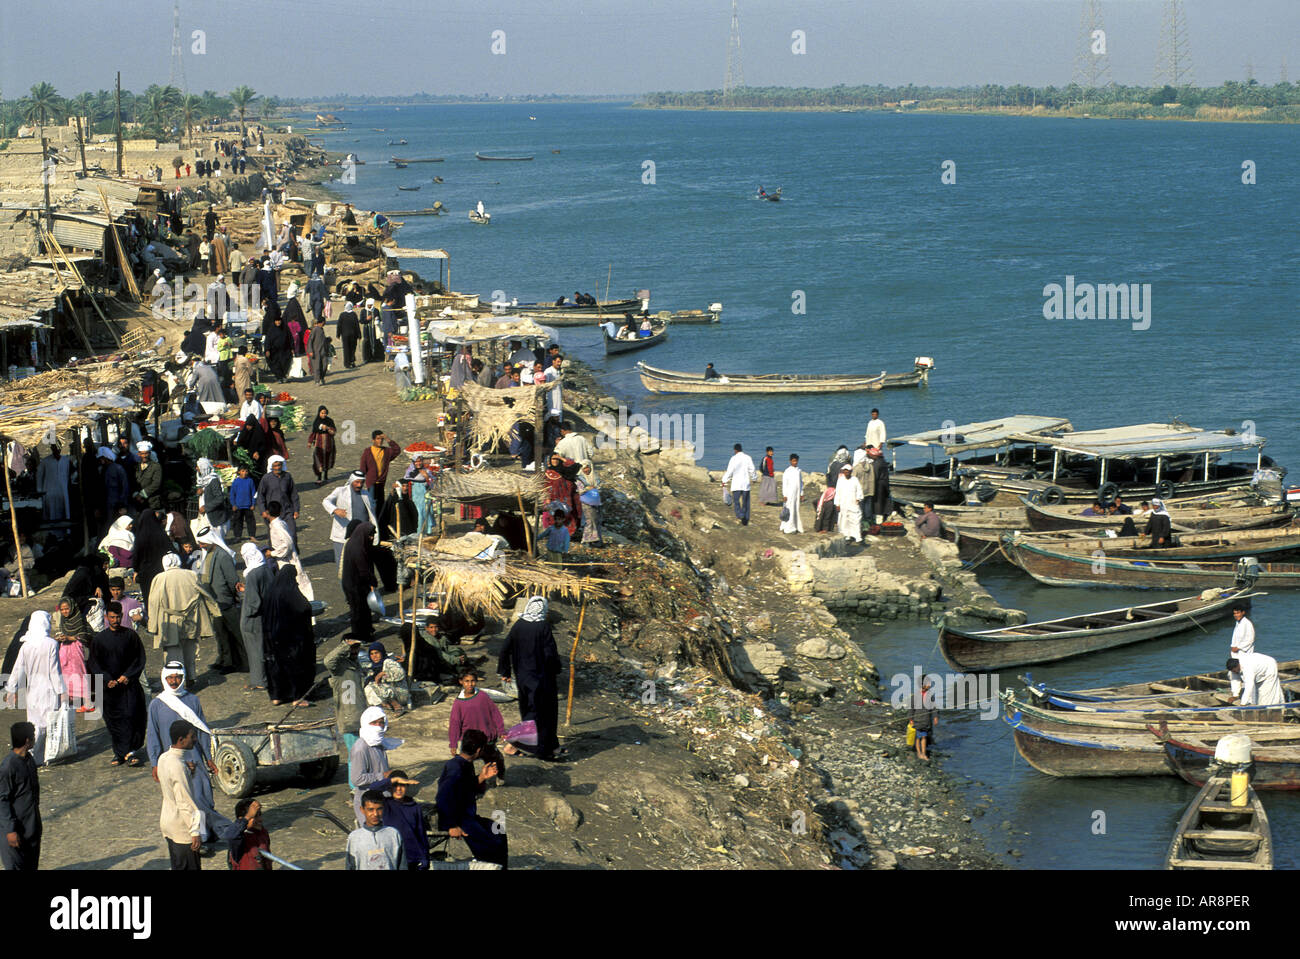 Market scene along Shatt al Arab waterway near Basra Iraq. Stock Photo